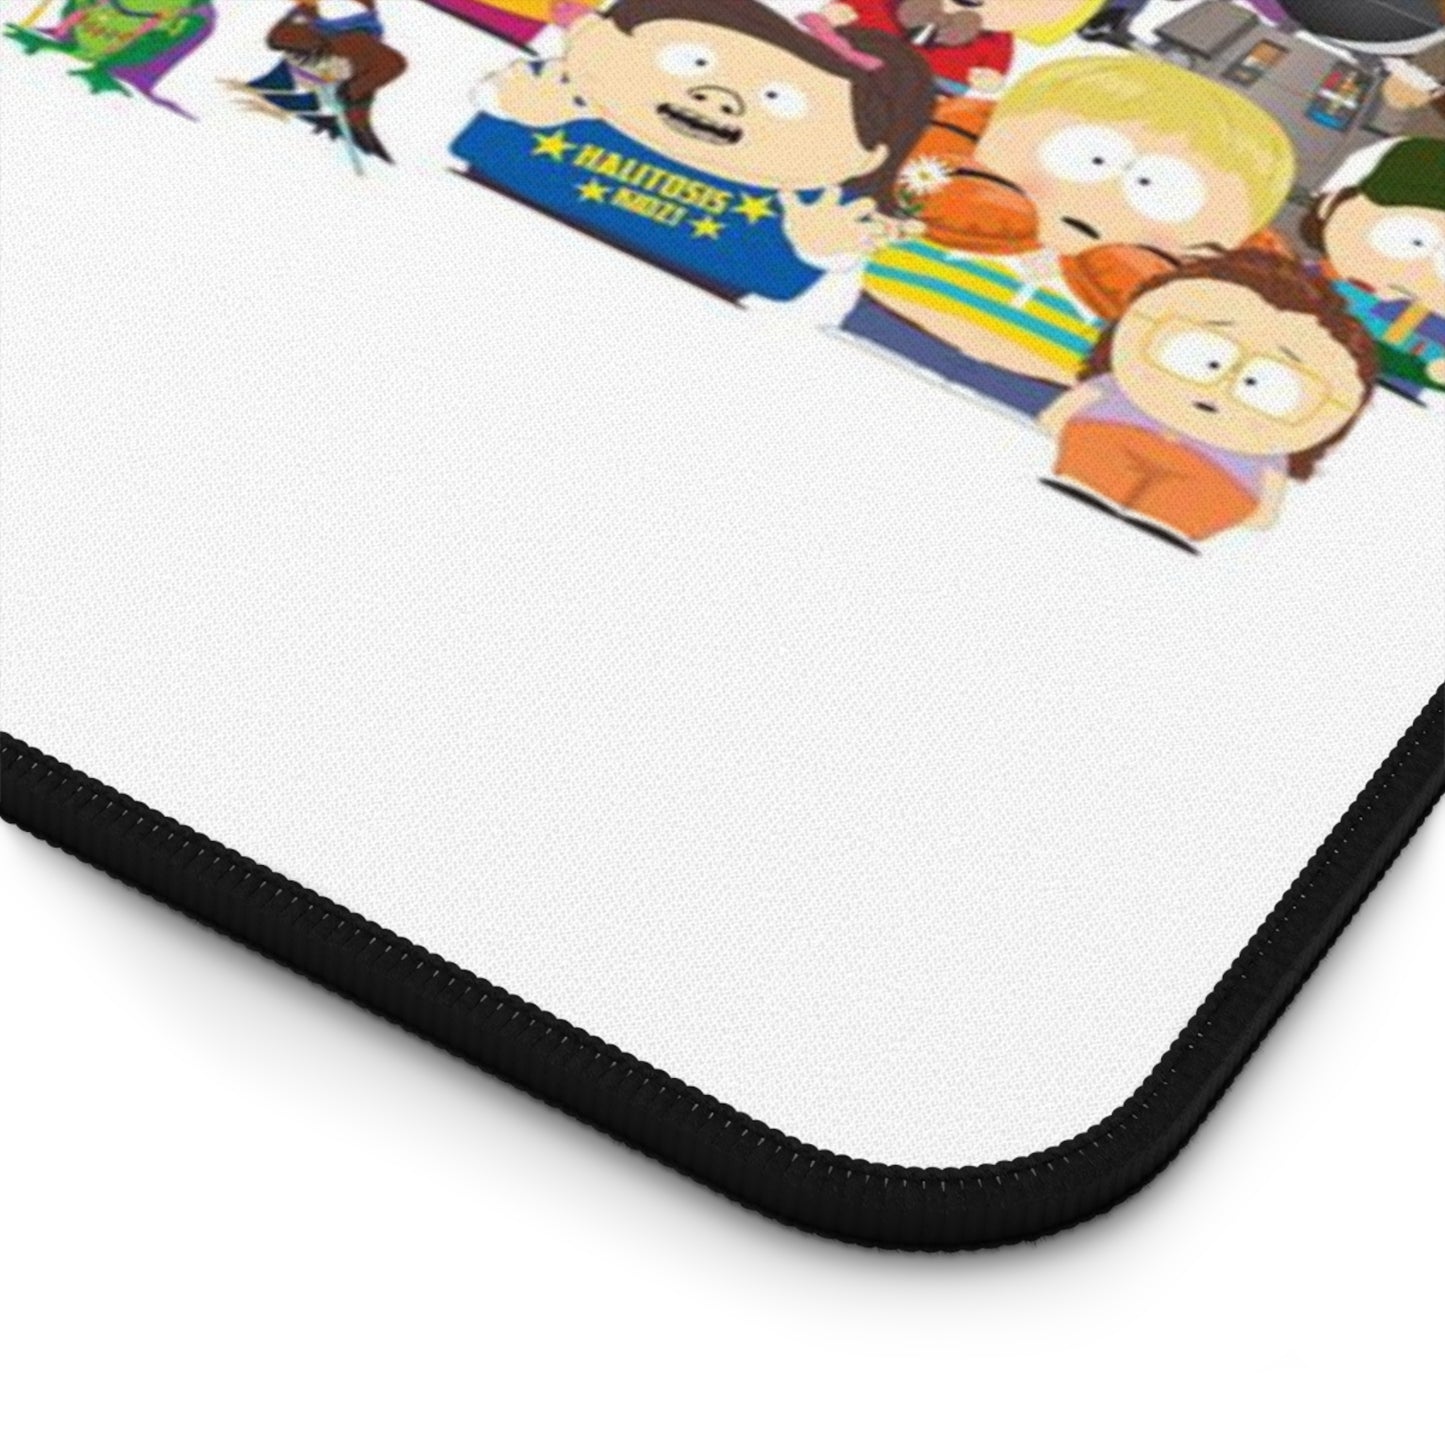 South Park Alle Charaktere High Definition PC PS Videospiel Schreibtischunterlage Mousepad